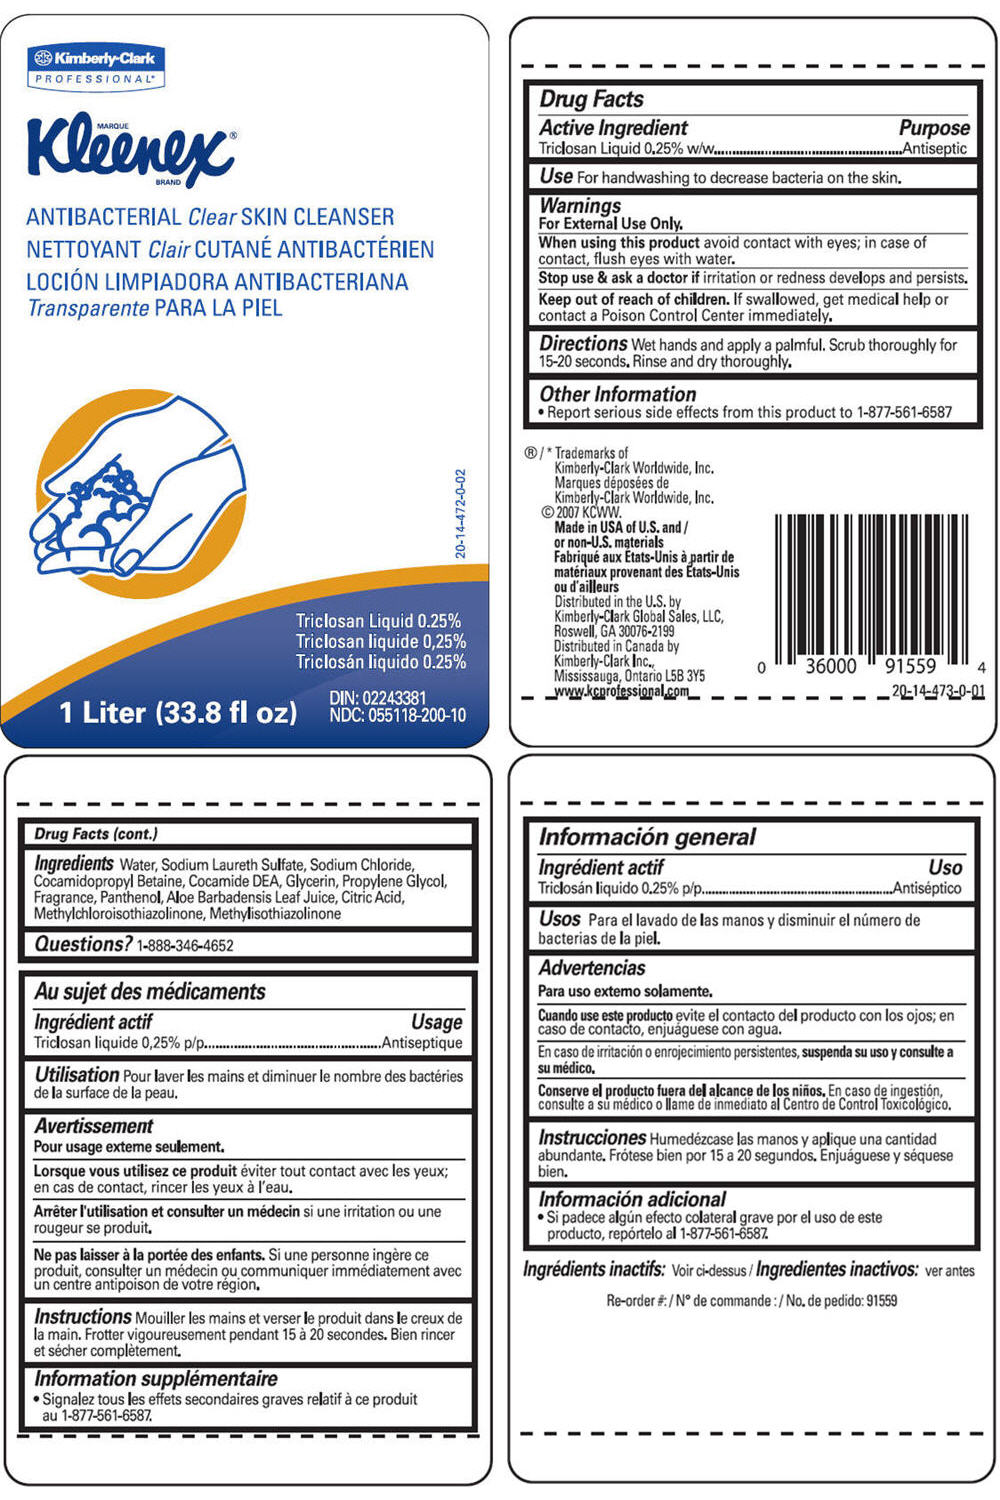 PRINCIPAL DISPLAY PANEL - 1 Liter Bottle Label